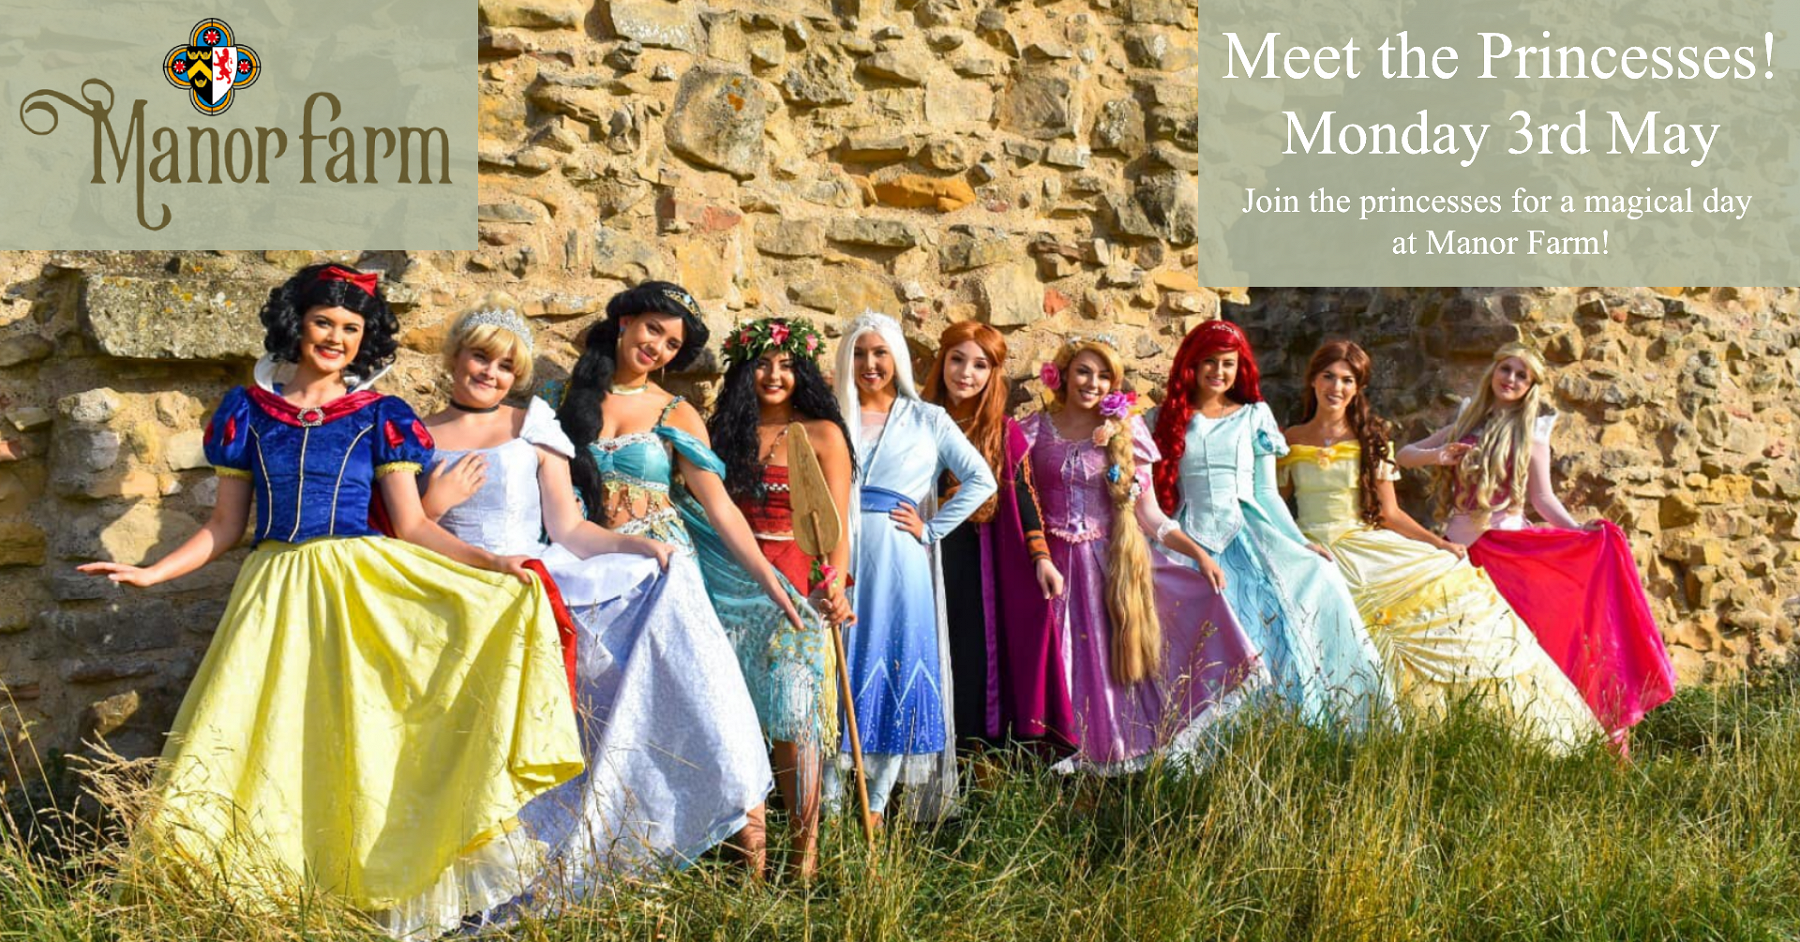 Meet the princesses at Manor Farm!